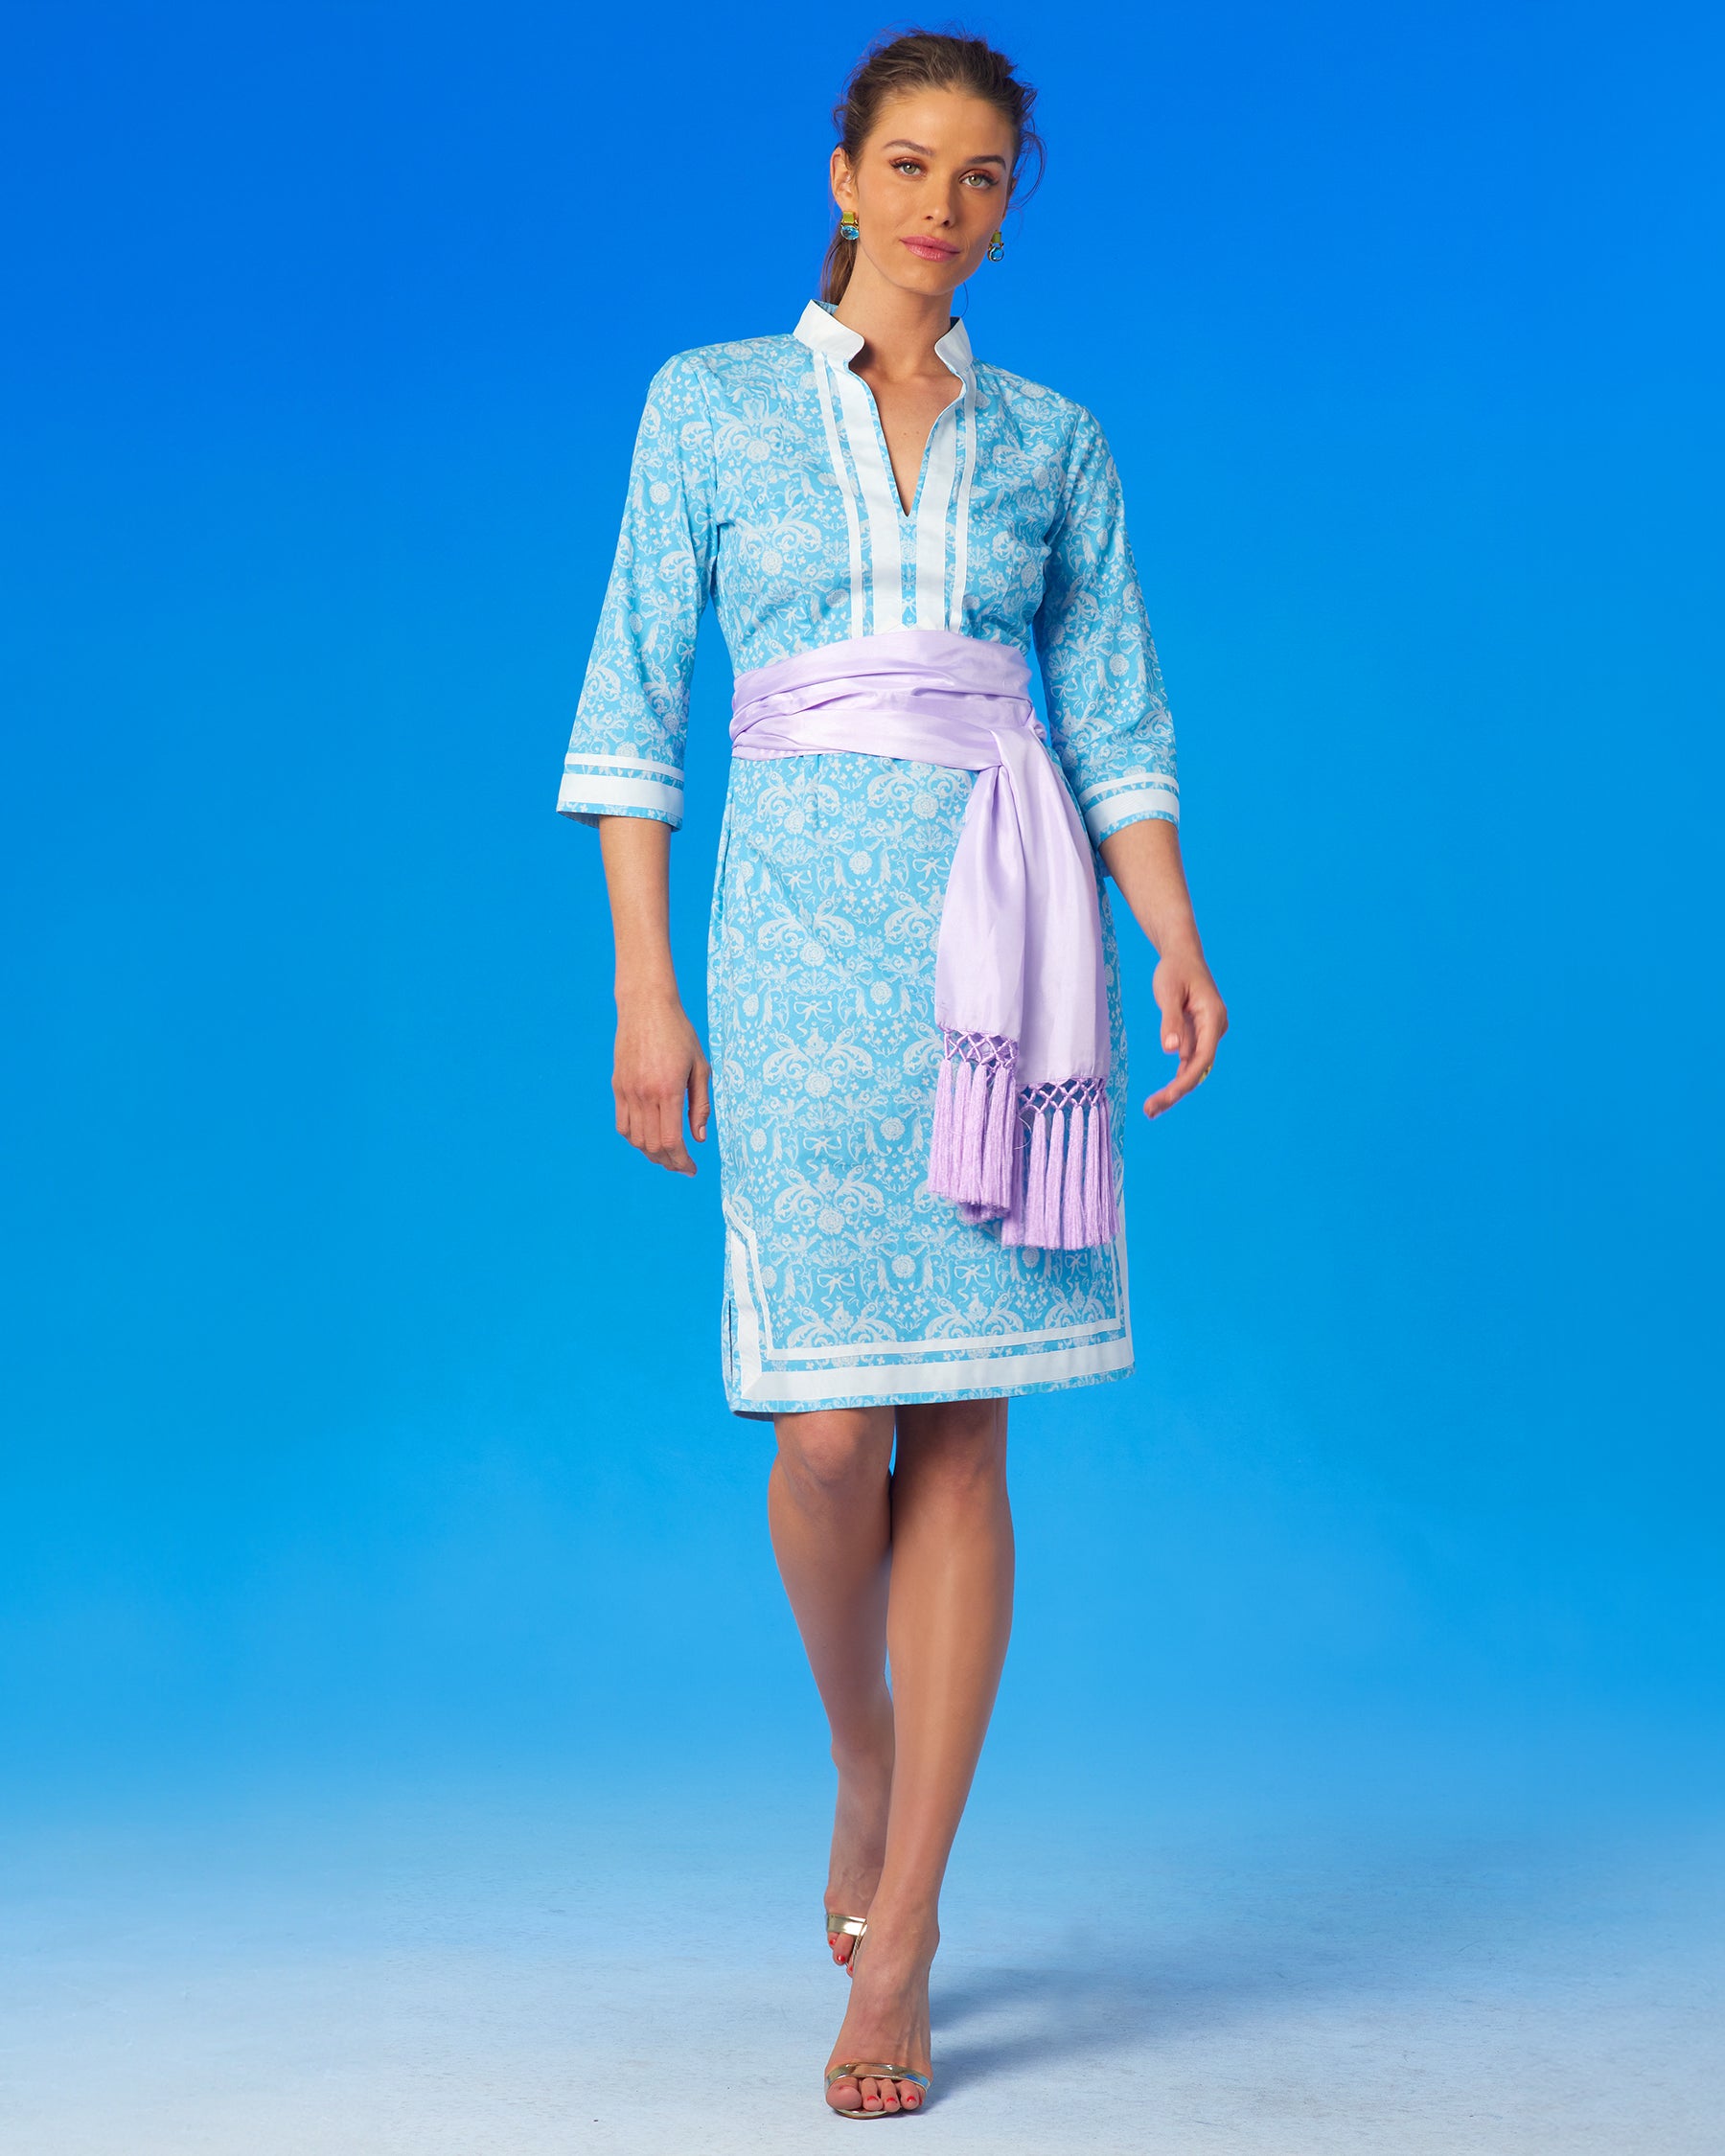 Capri Short Tunic Dress in Regency Porcelain Ribbons worn with the Cosima Sash Belt in Sunset Lavender-Walking forward